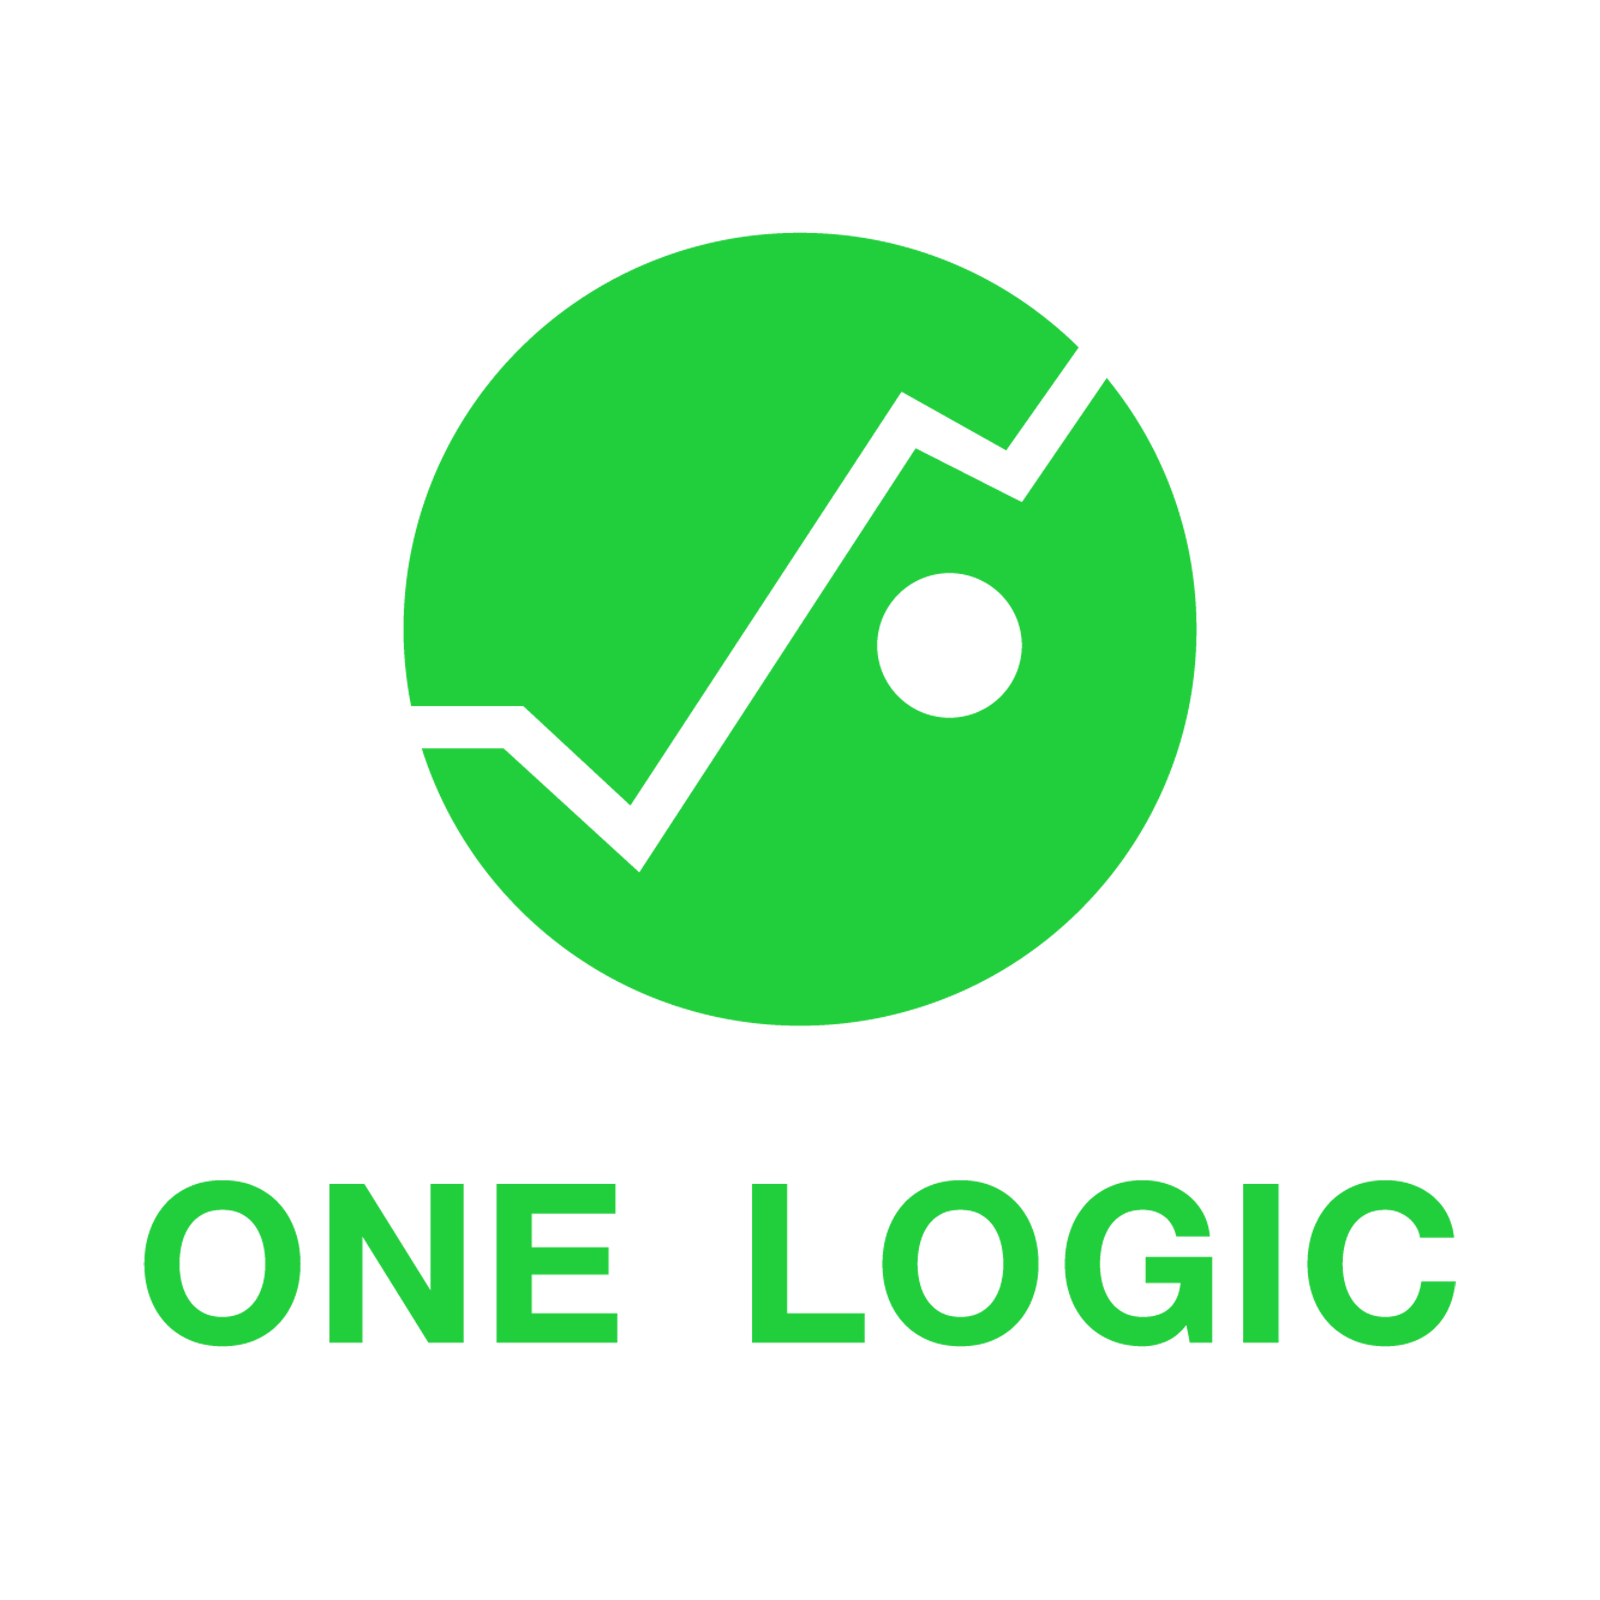 Partner: One Logic